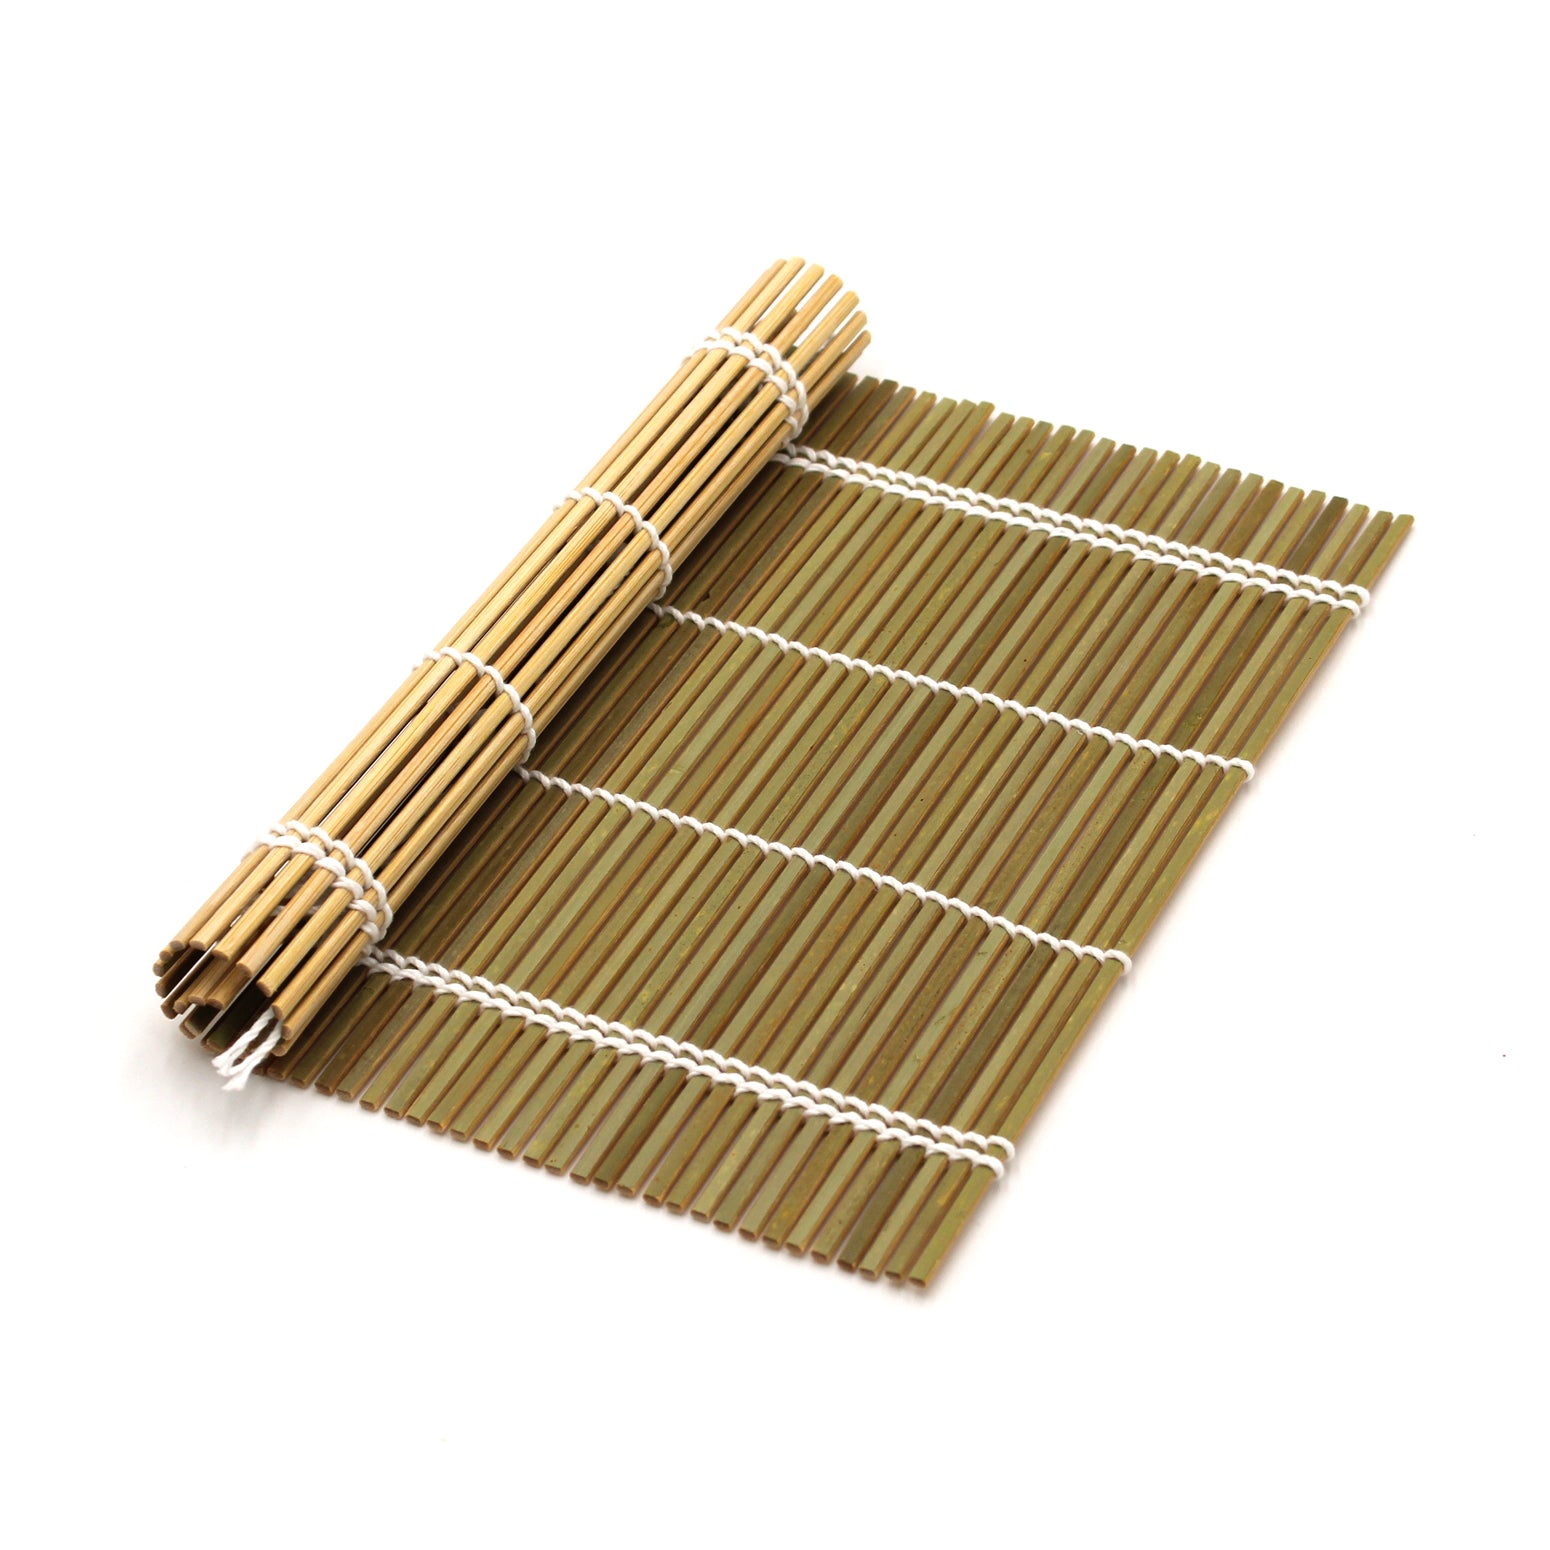 Bamboo Sushi Roller Mat Natural Bamboo Sushi Mat Choice of 2 Different Size